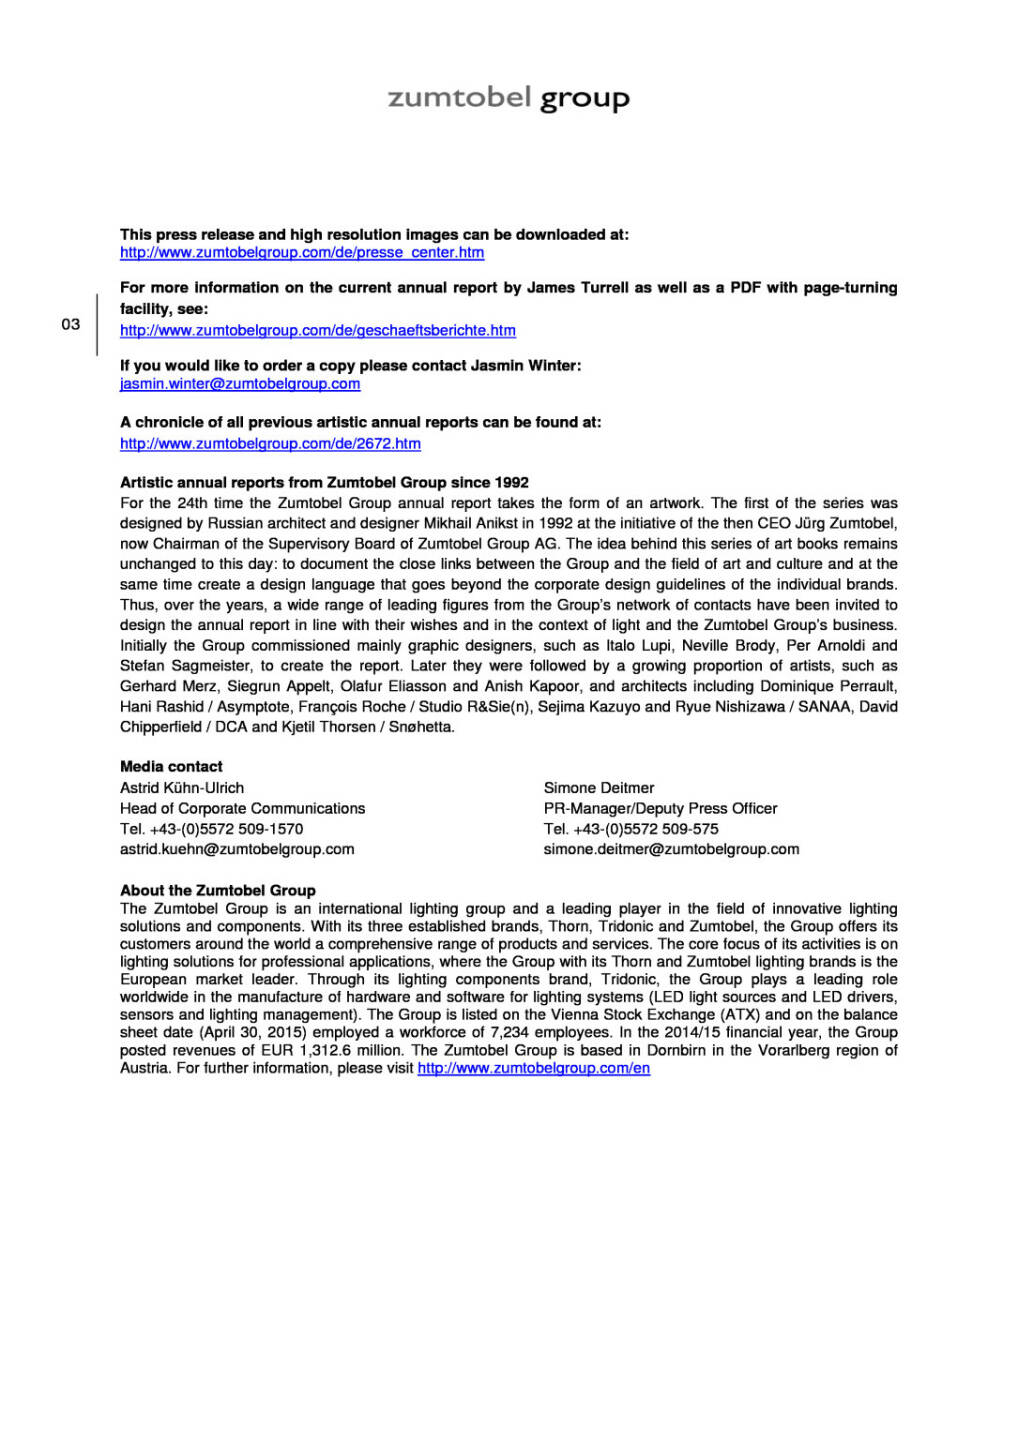 James Turrell checkt Zumtobel Group GB, Seite 3/3, komplettes Dokument unter http://boerse-social.com/static/uploads/file_252_james_turrell_checkt_zumtobel_group_gb.pdf